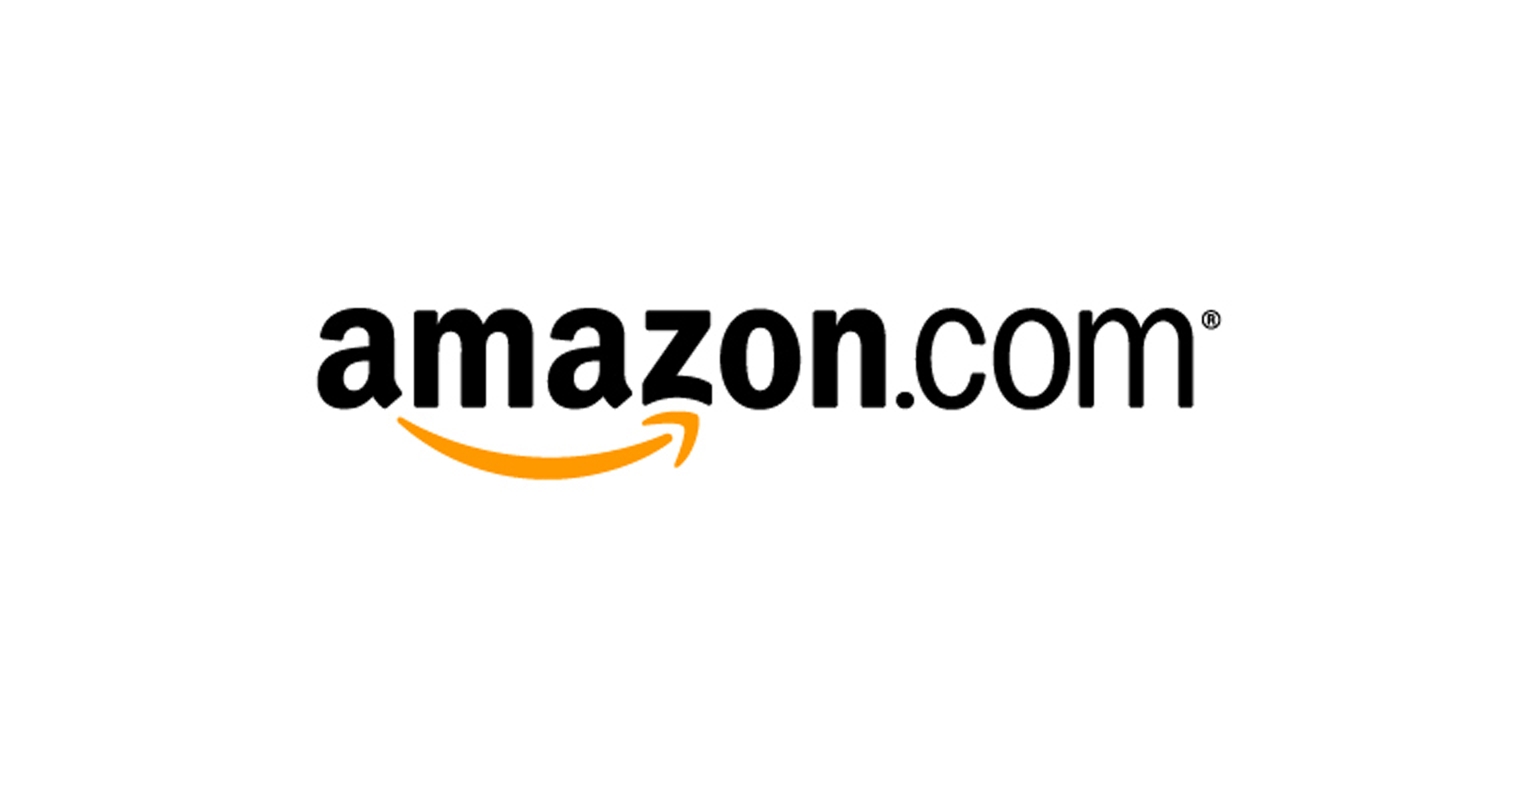 Https uknig com. Амазон эмблема. The Amazon. Amazon.com. Amazon без фона.